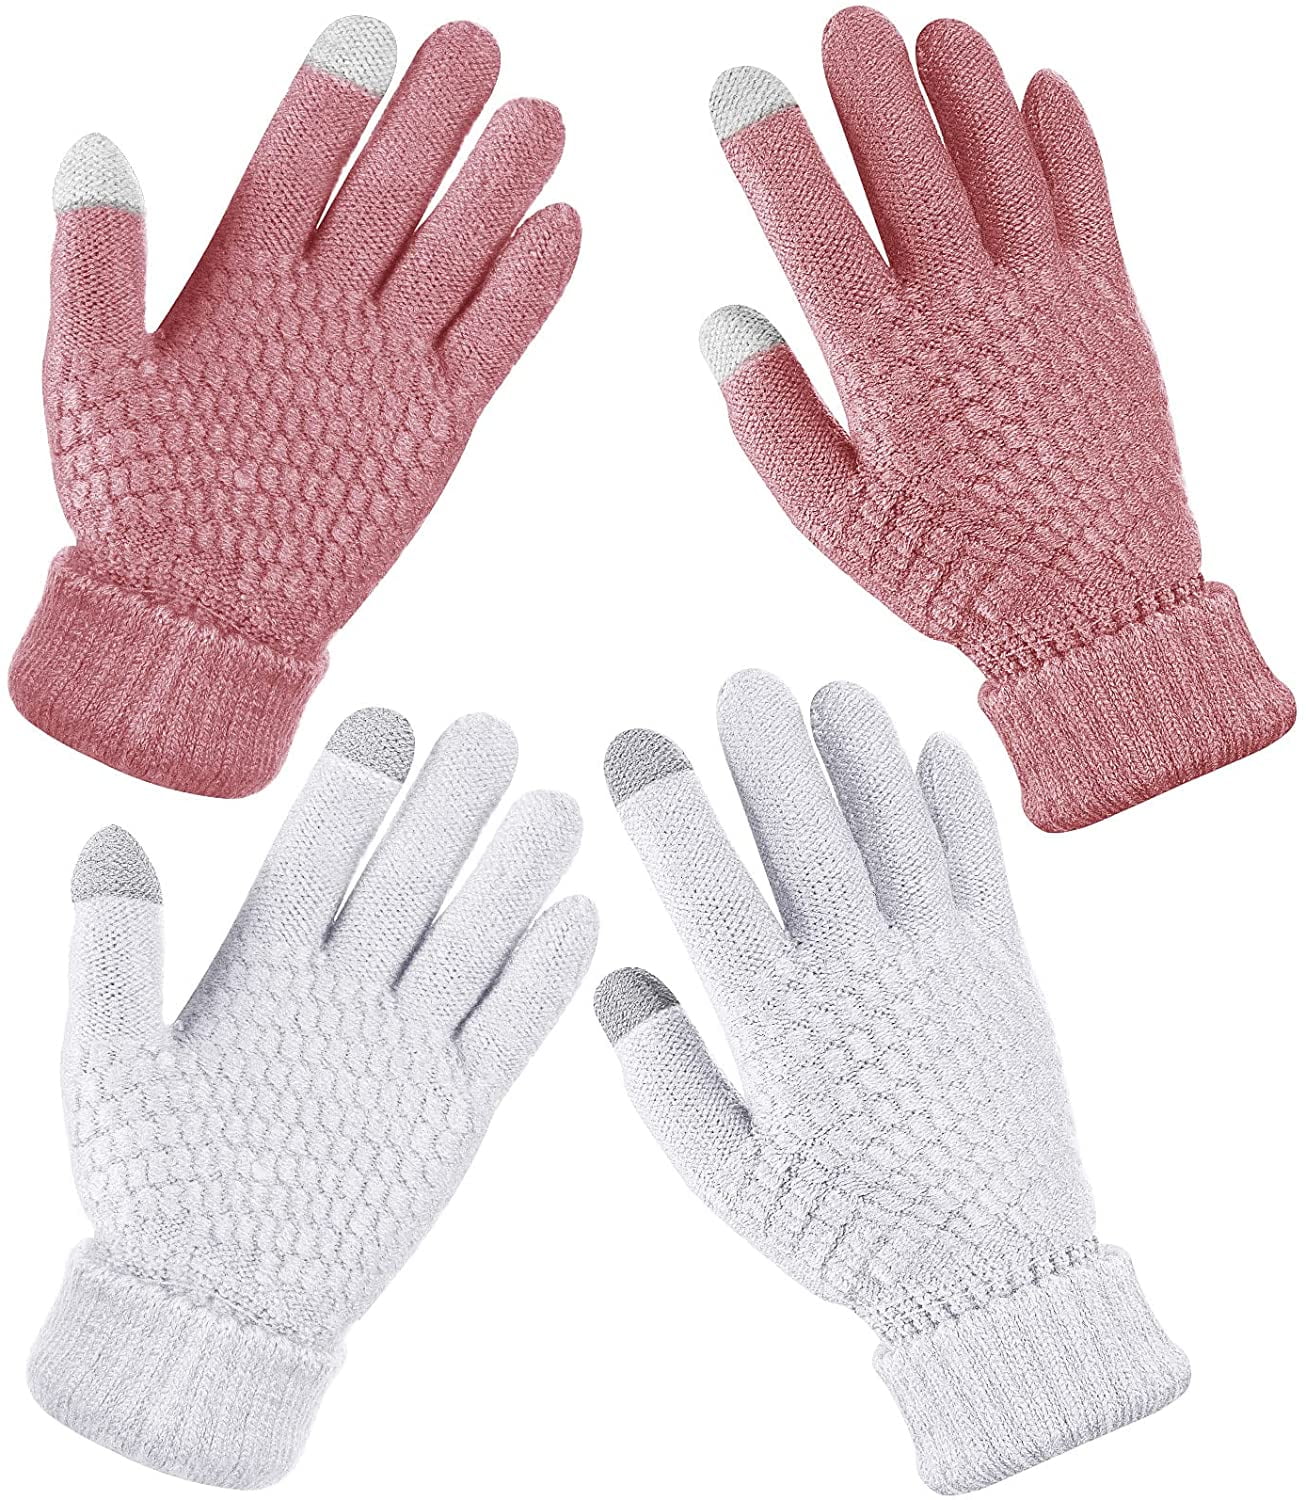 Women Touchscreen Gloves Winter Warm Fleece Texting Warm Lined Gloves 